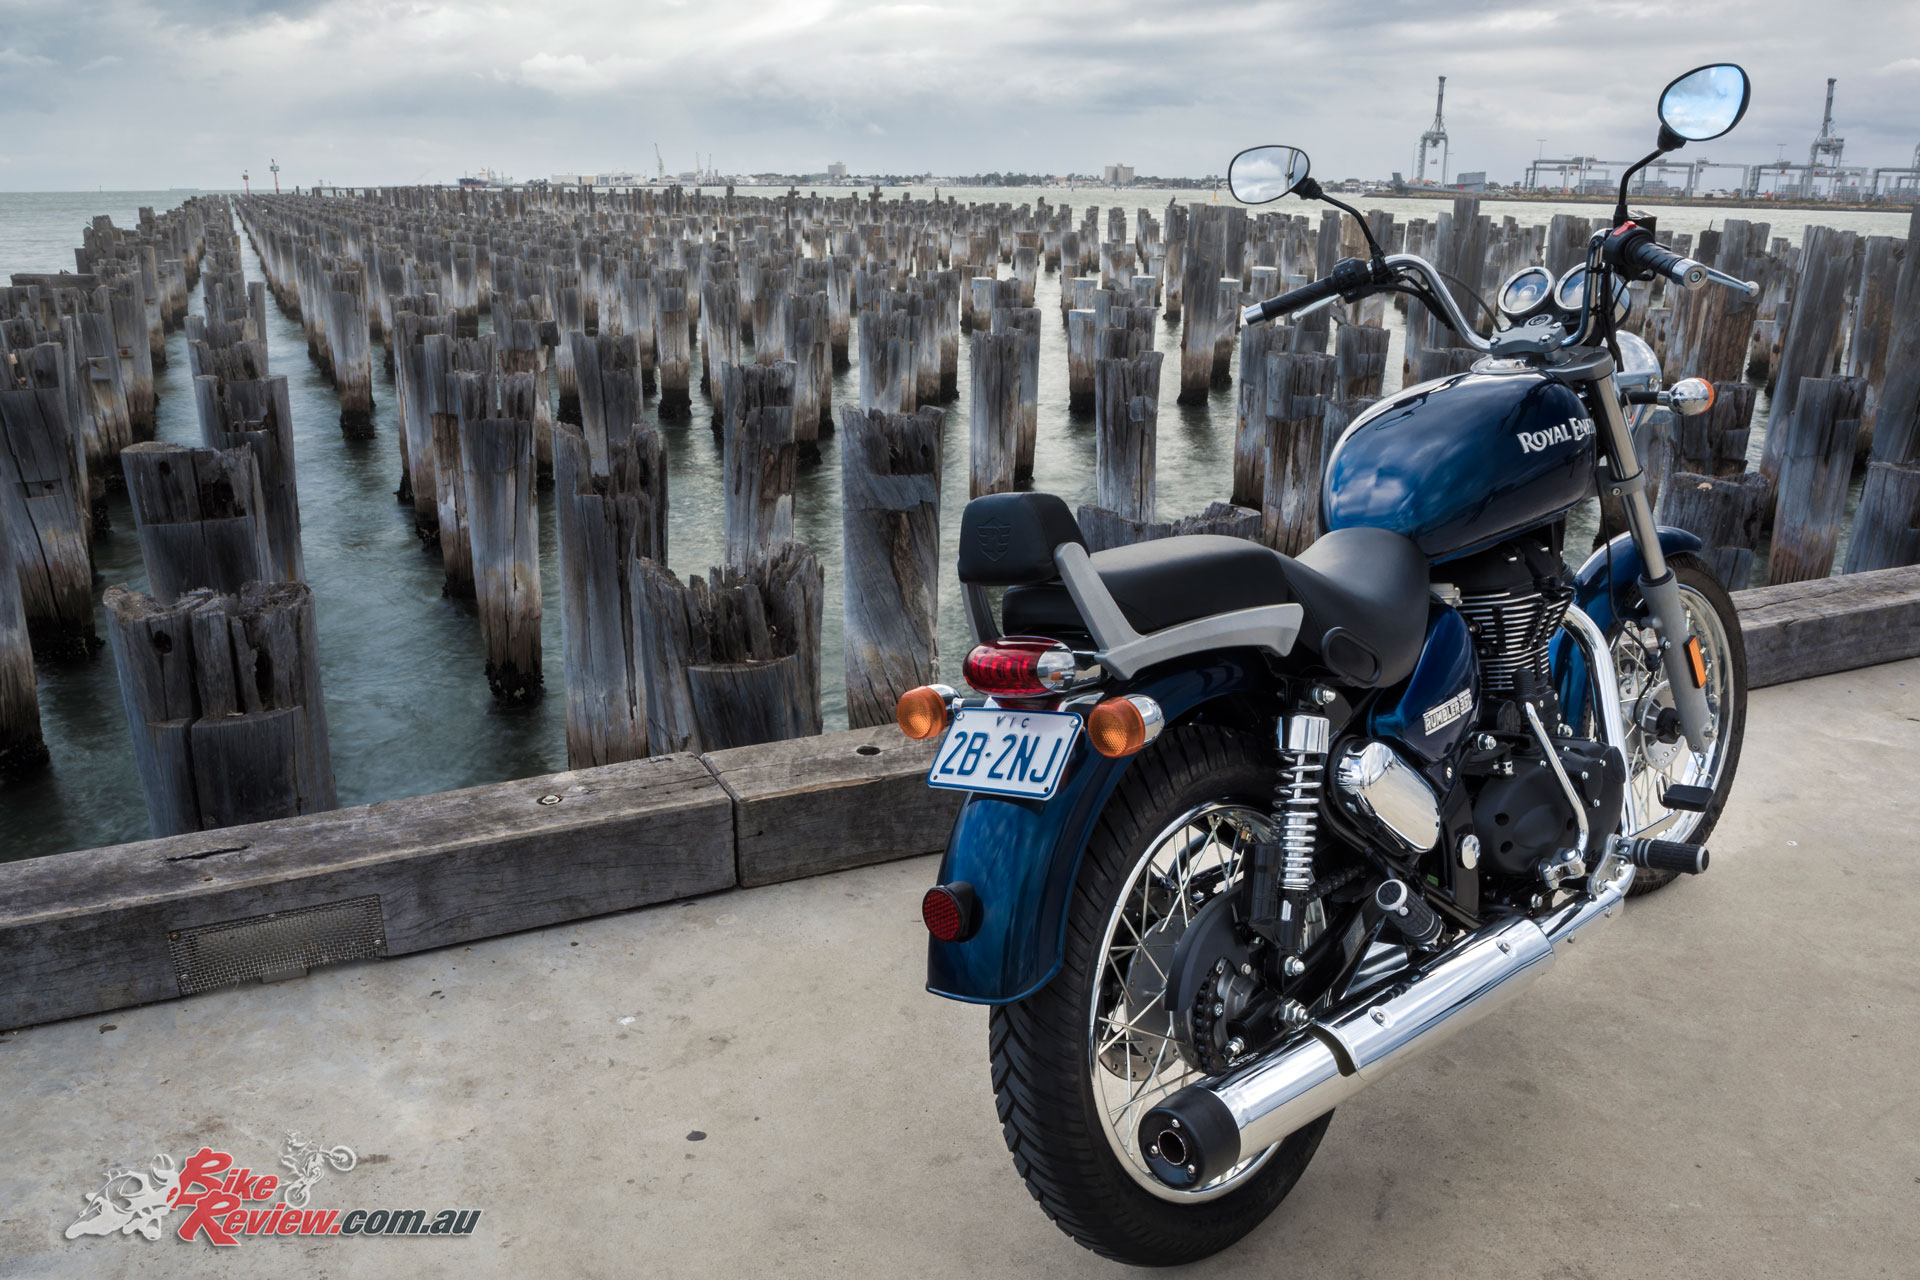 2016 Kawasaki KLR650 Bike Review Actions (6) - Bike Review